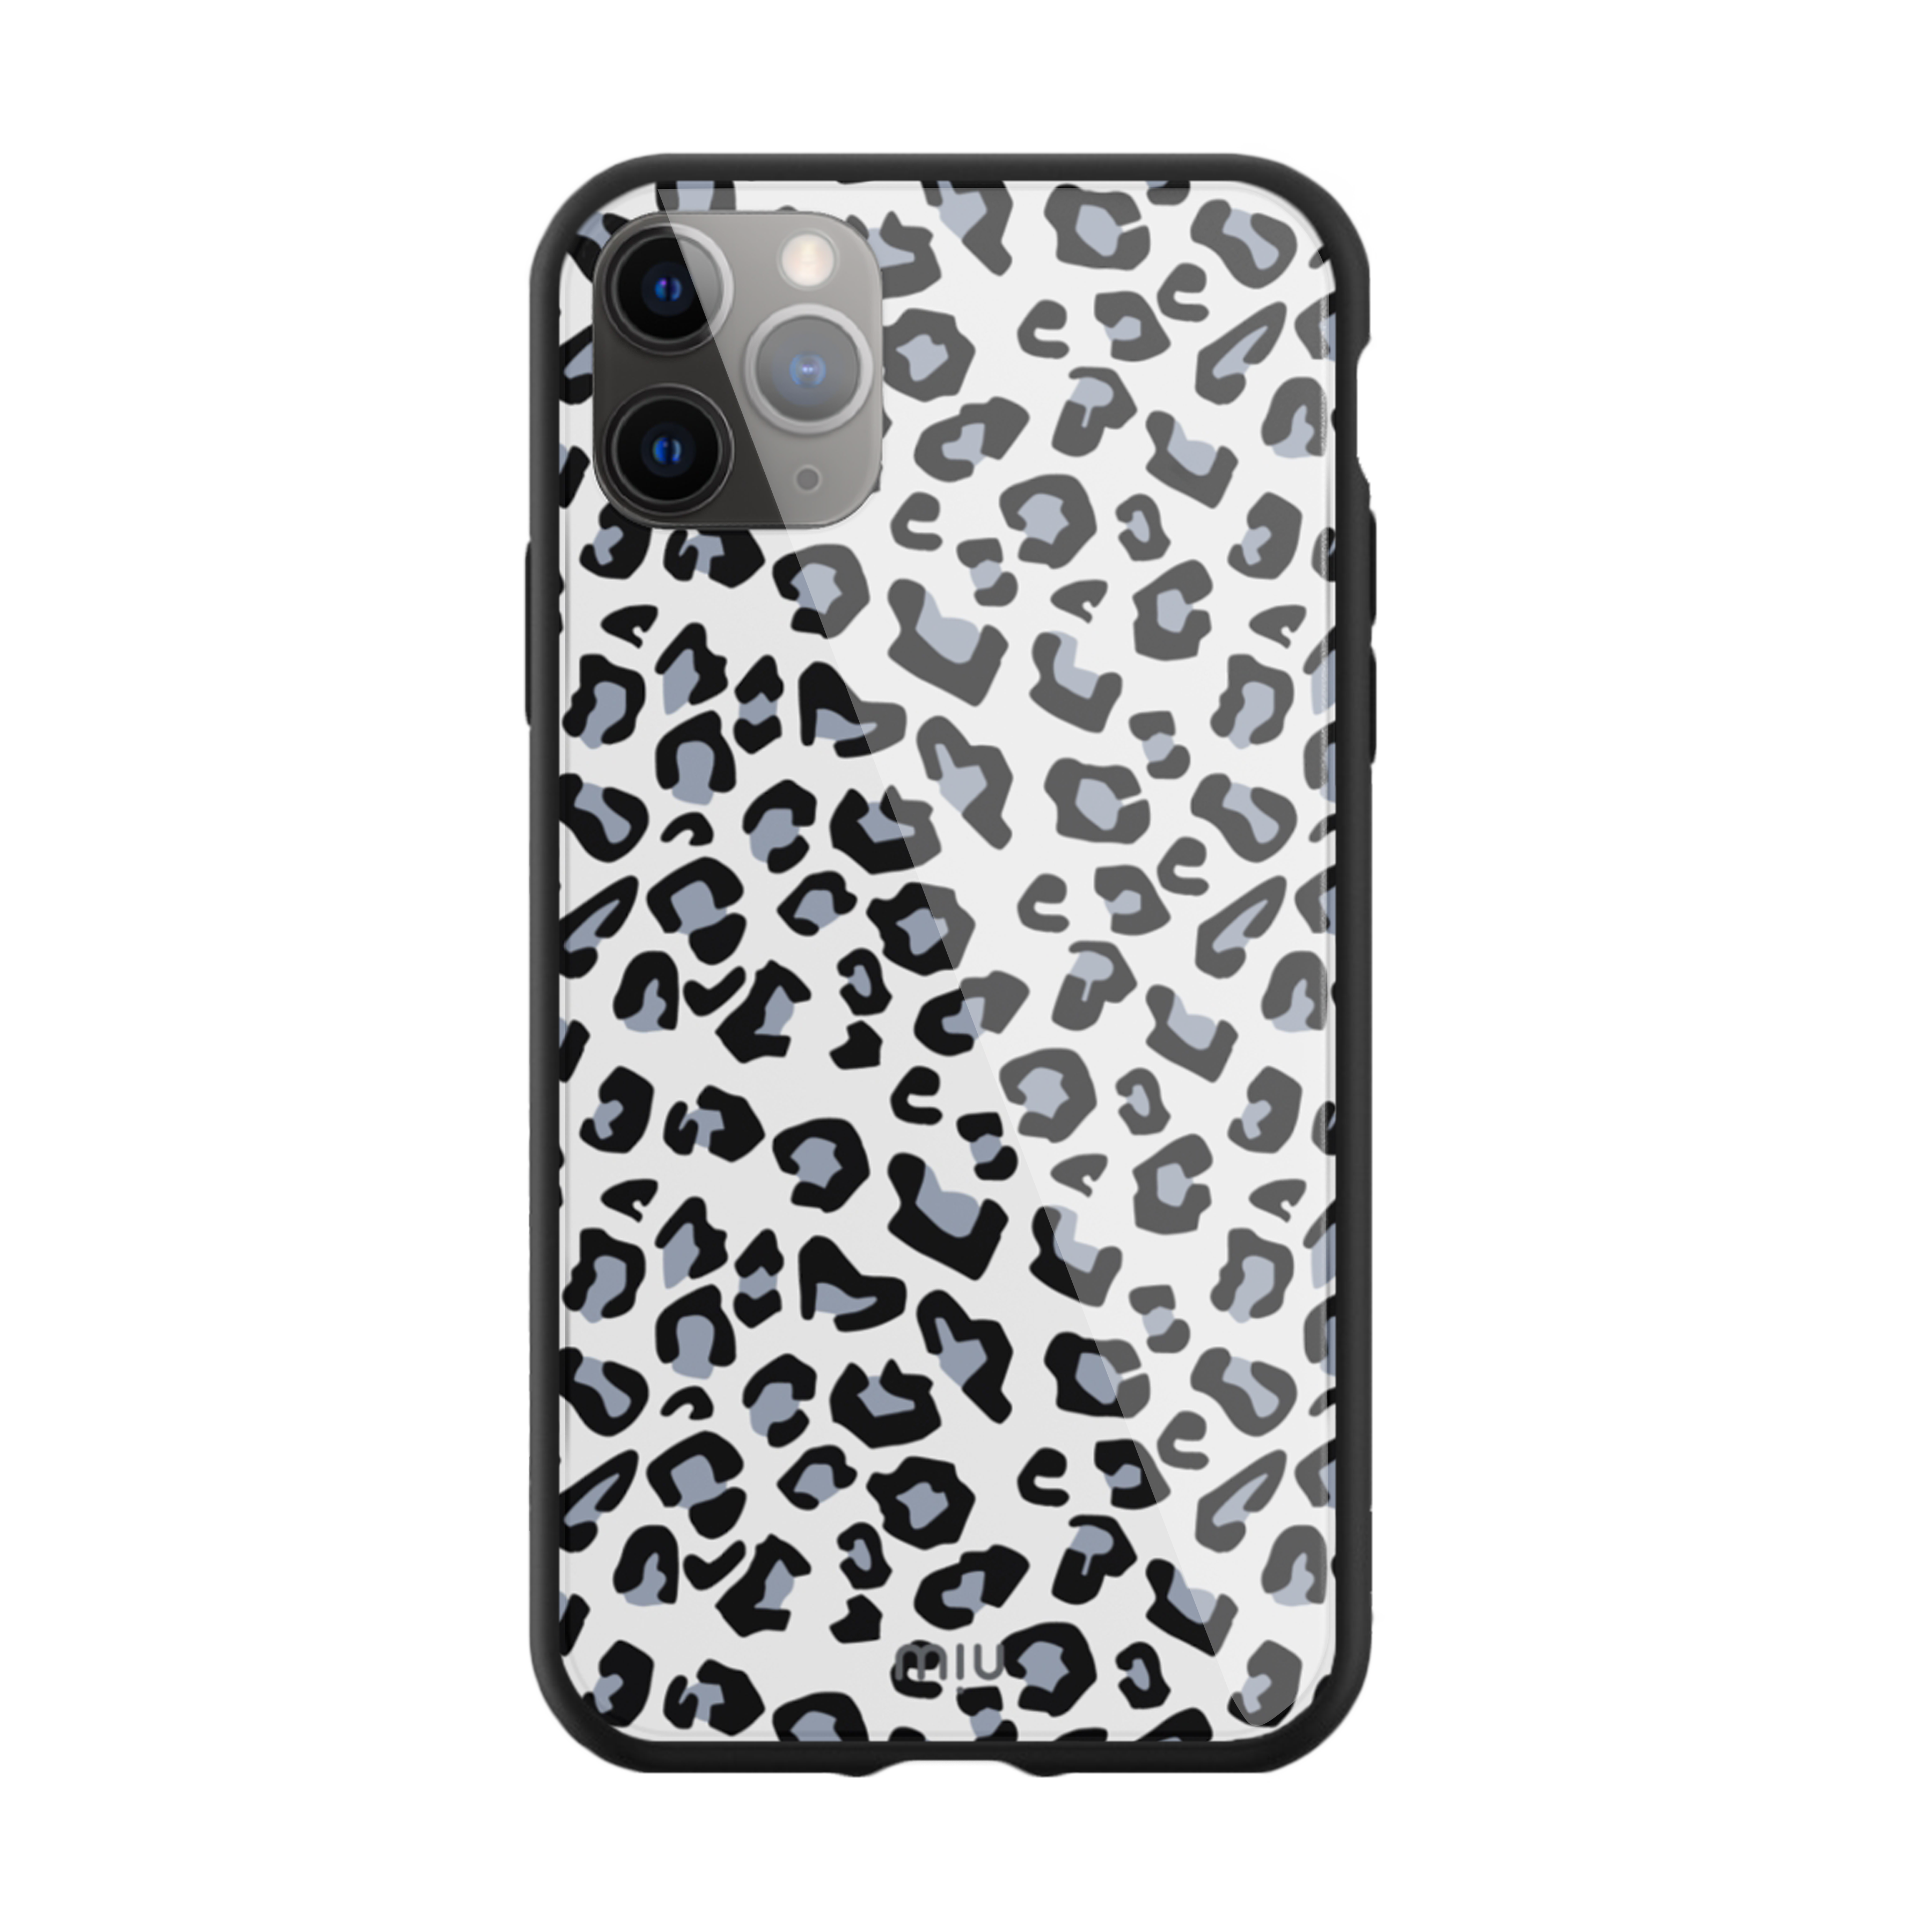 The Leopard Skin Pattern (White)